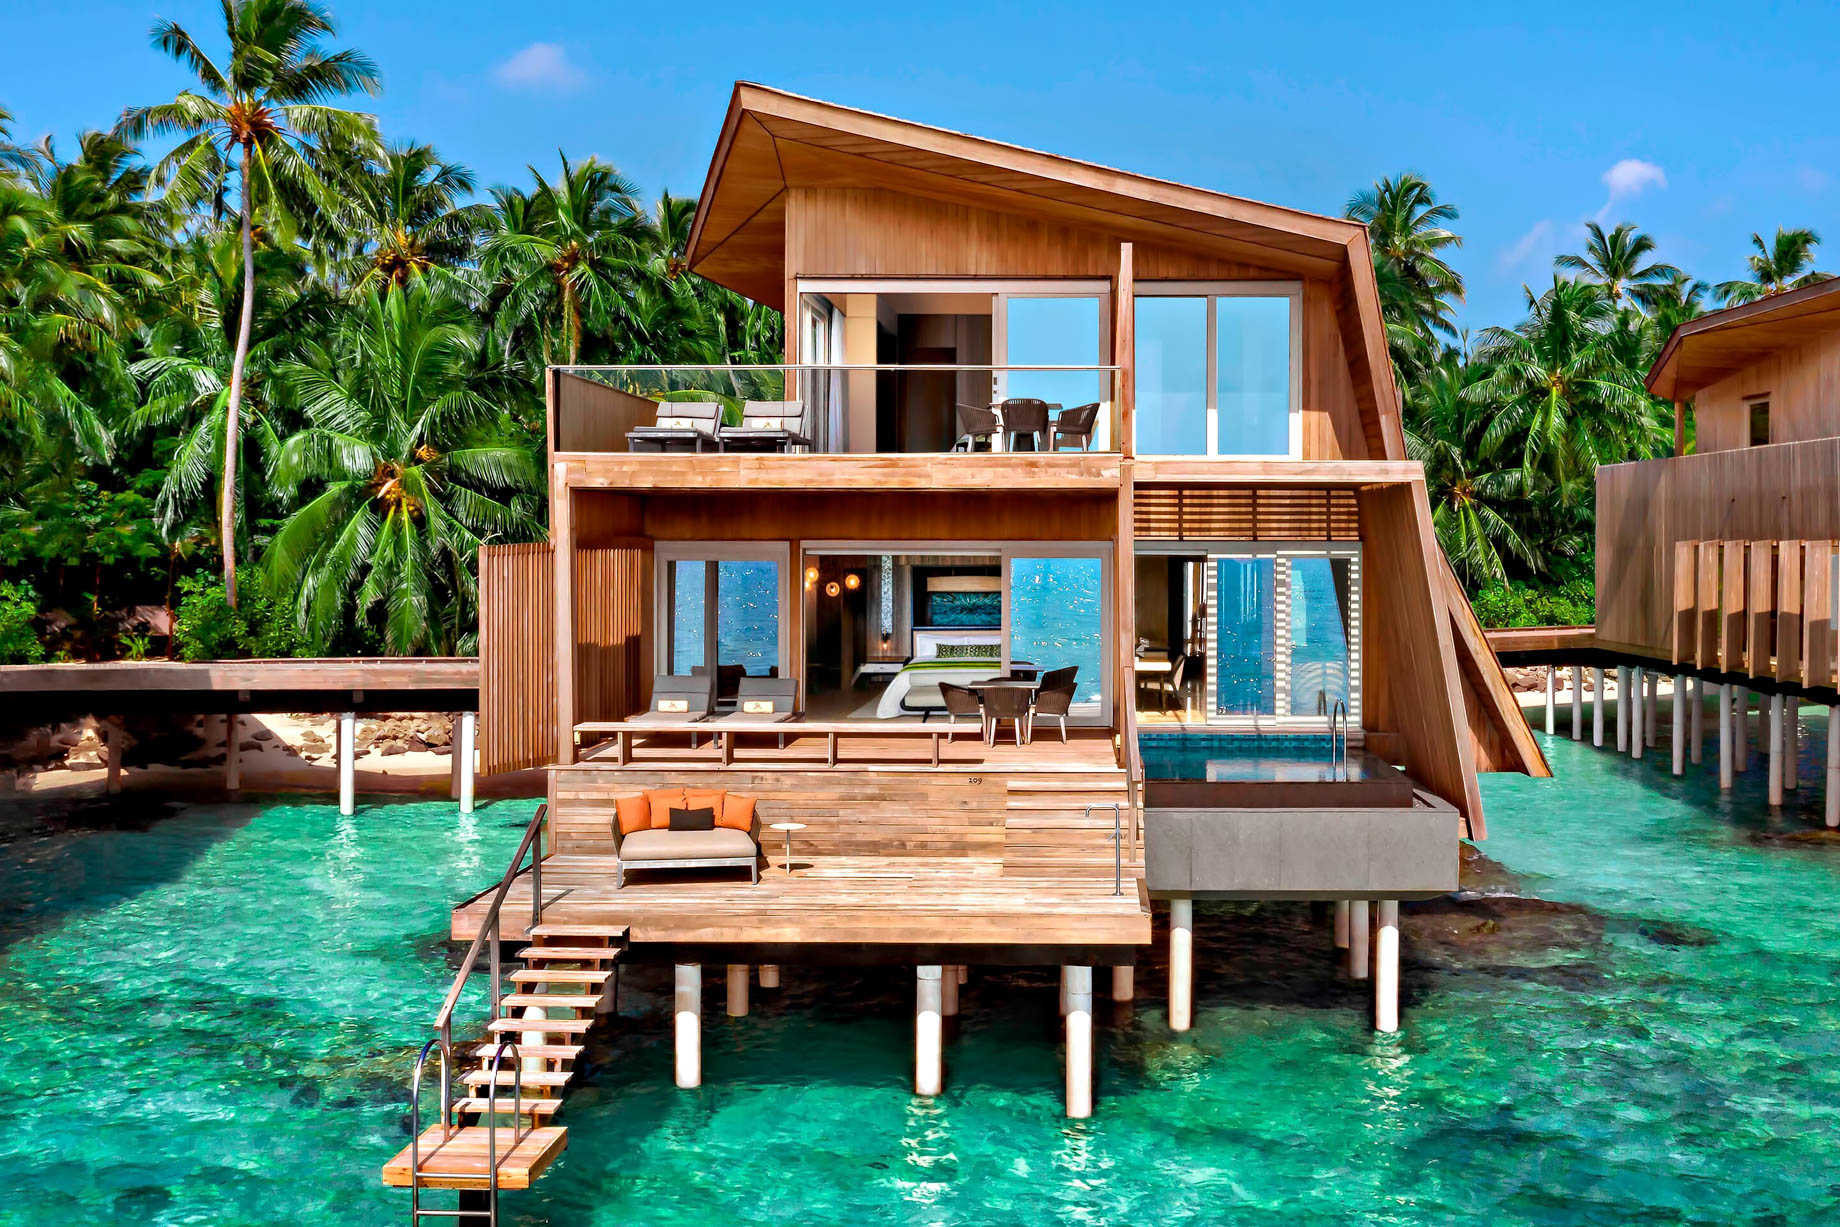 The St. Regis Maldives Vommuli Resort - Dhaalu Atoll, Maldives - Two Bedroom Sunset Overwater Villa